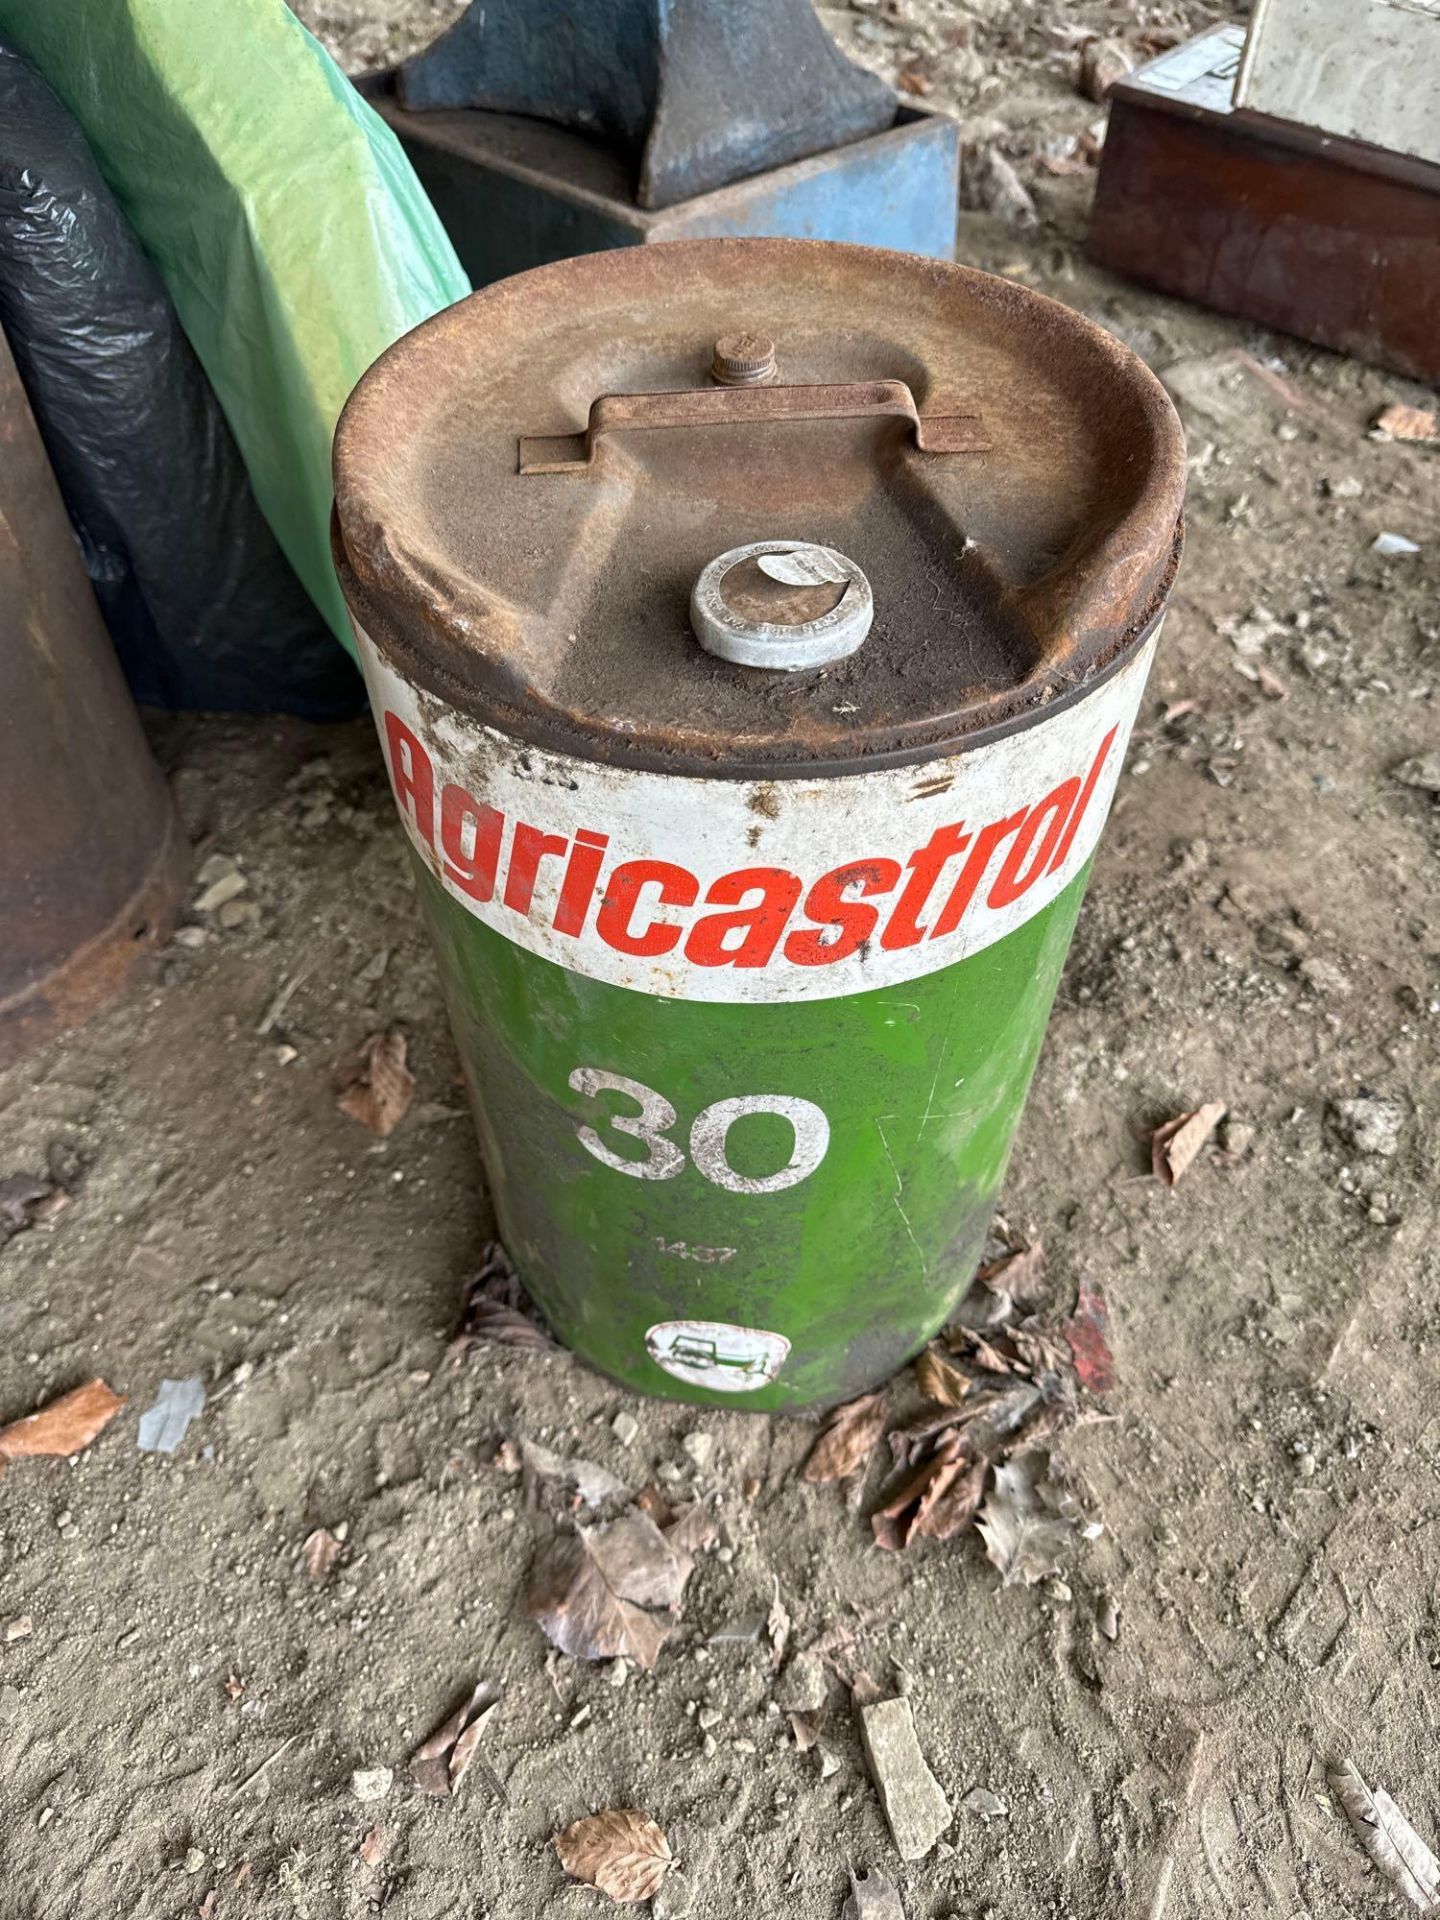 Agricastrol 30 oil drum (unopened)